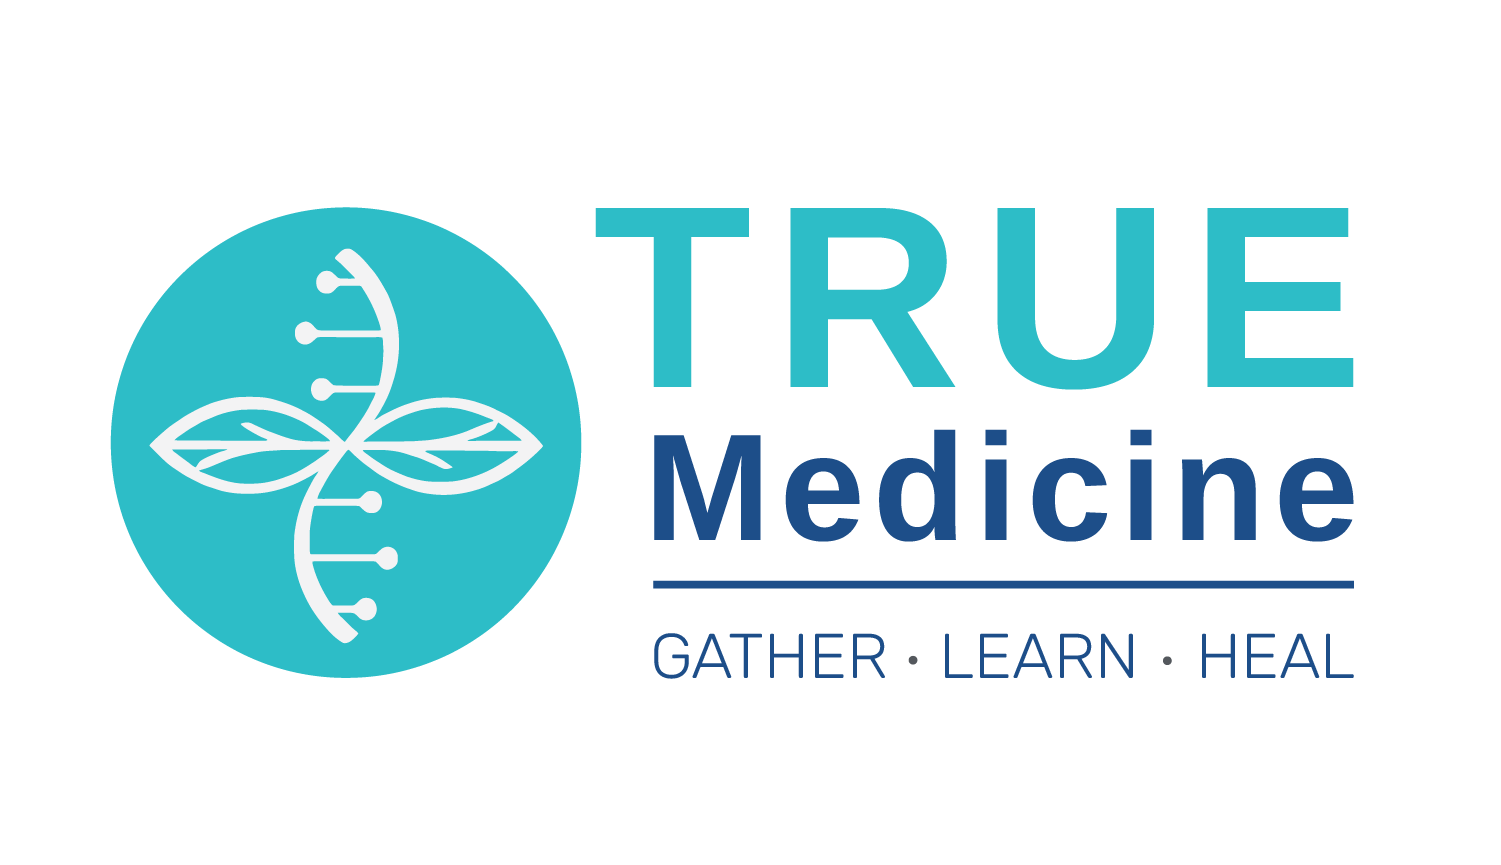 True-Medicine-_Logo-White-BG.png